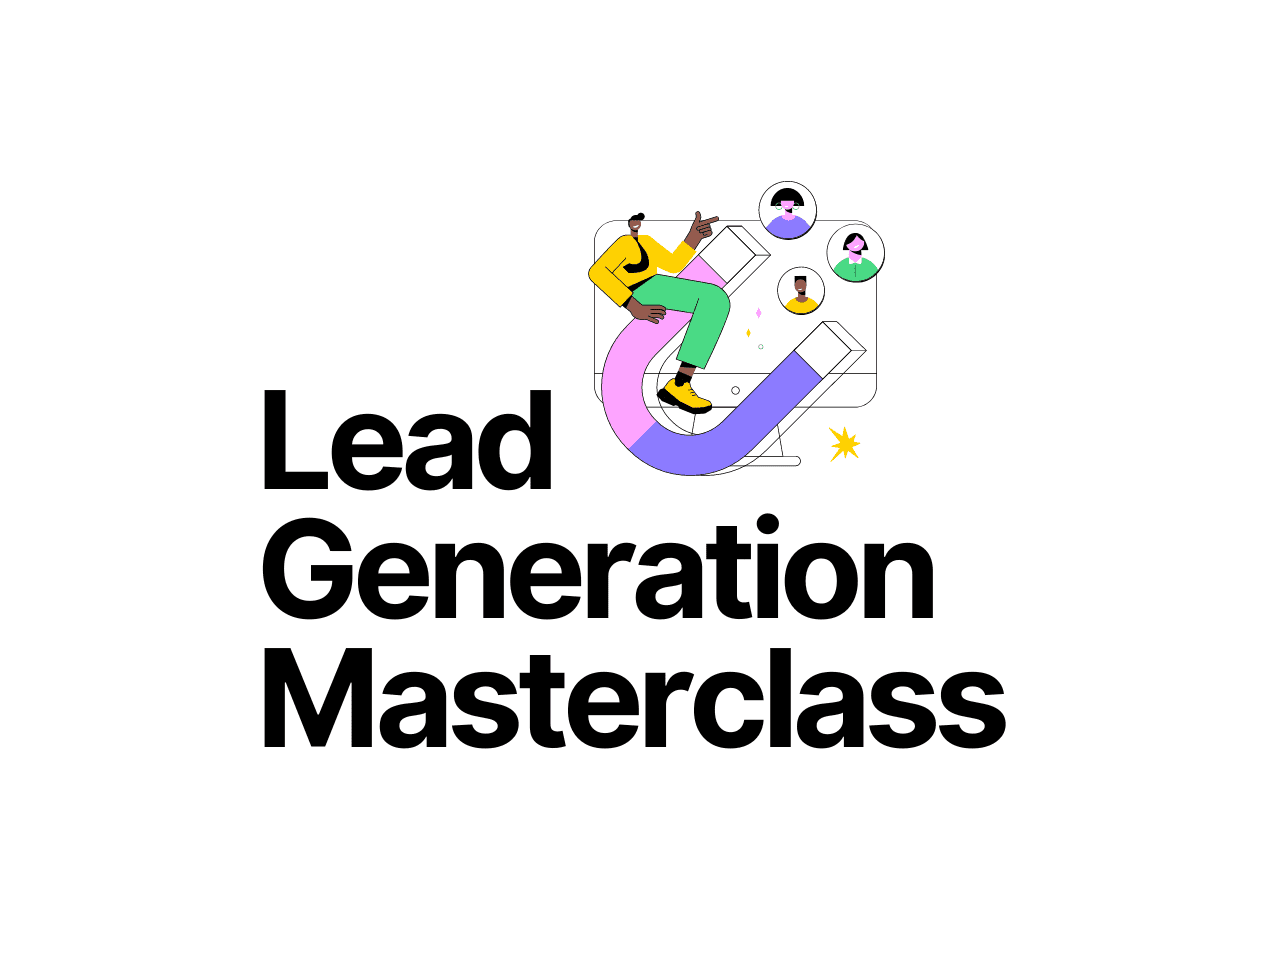 Lead Generation Masterclass